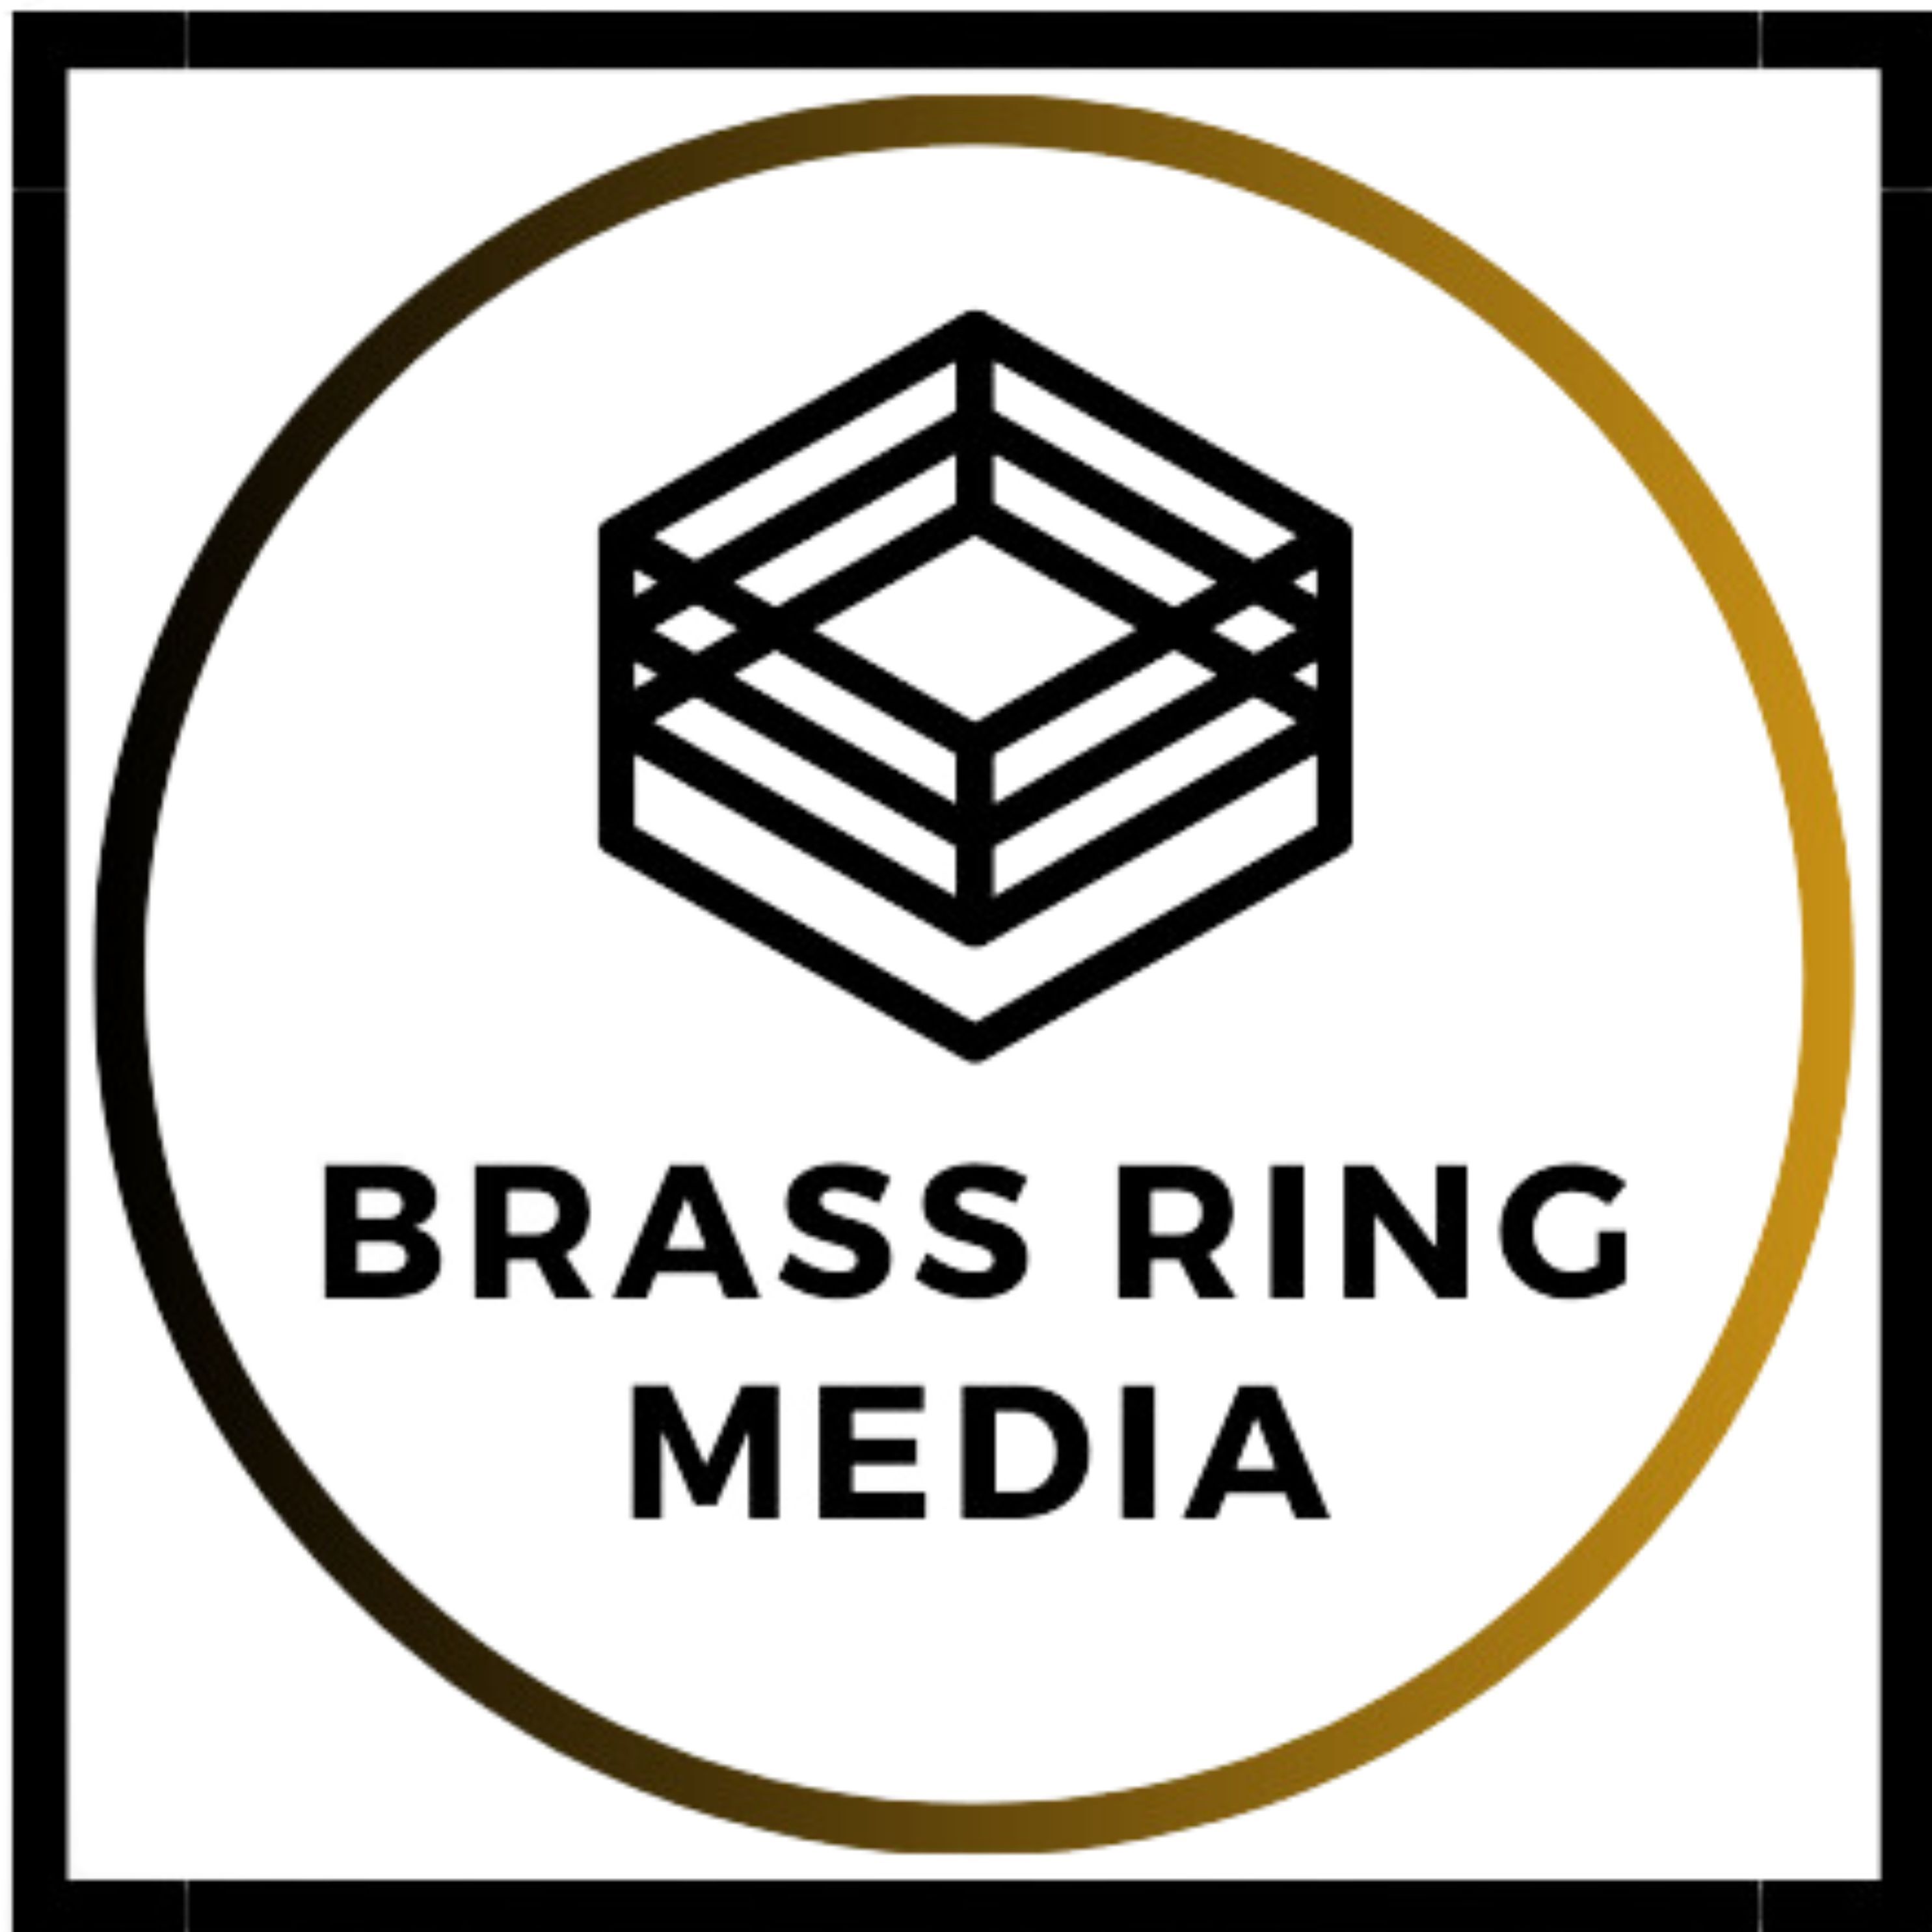 The Brass Ring Media Network